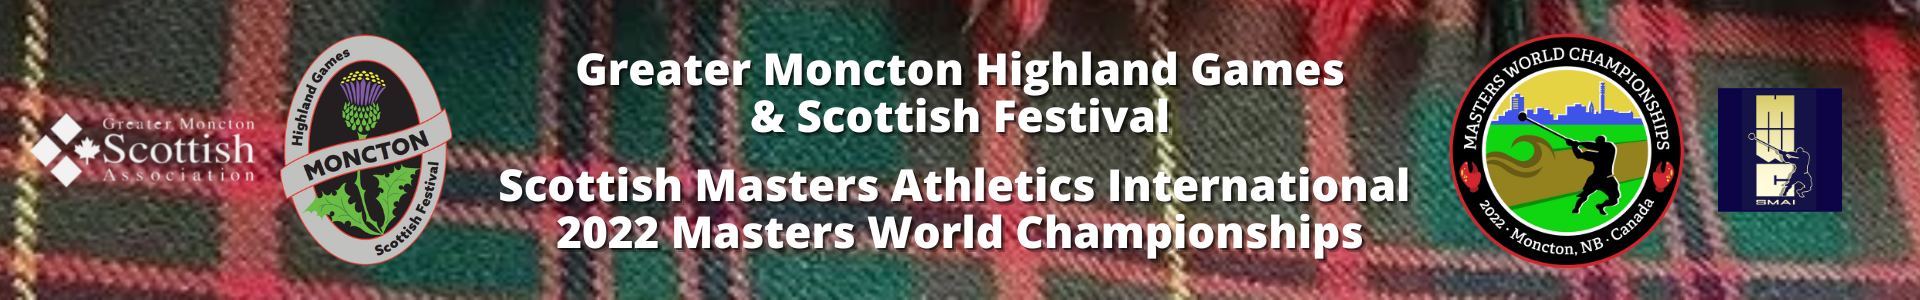 Greater Moncton Highland Games & Scottish Festival